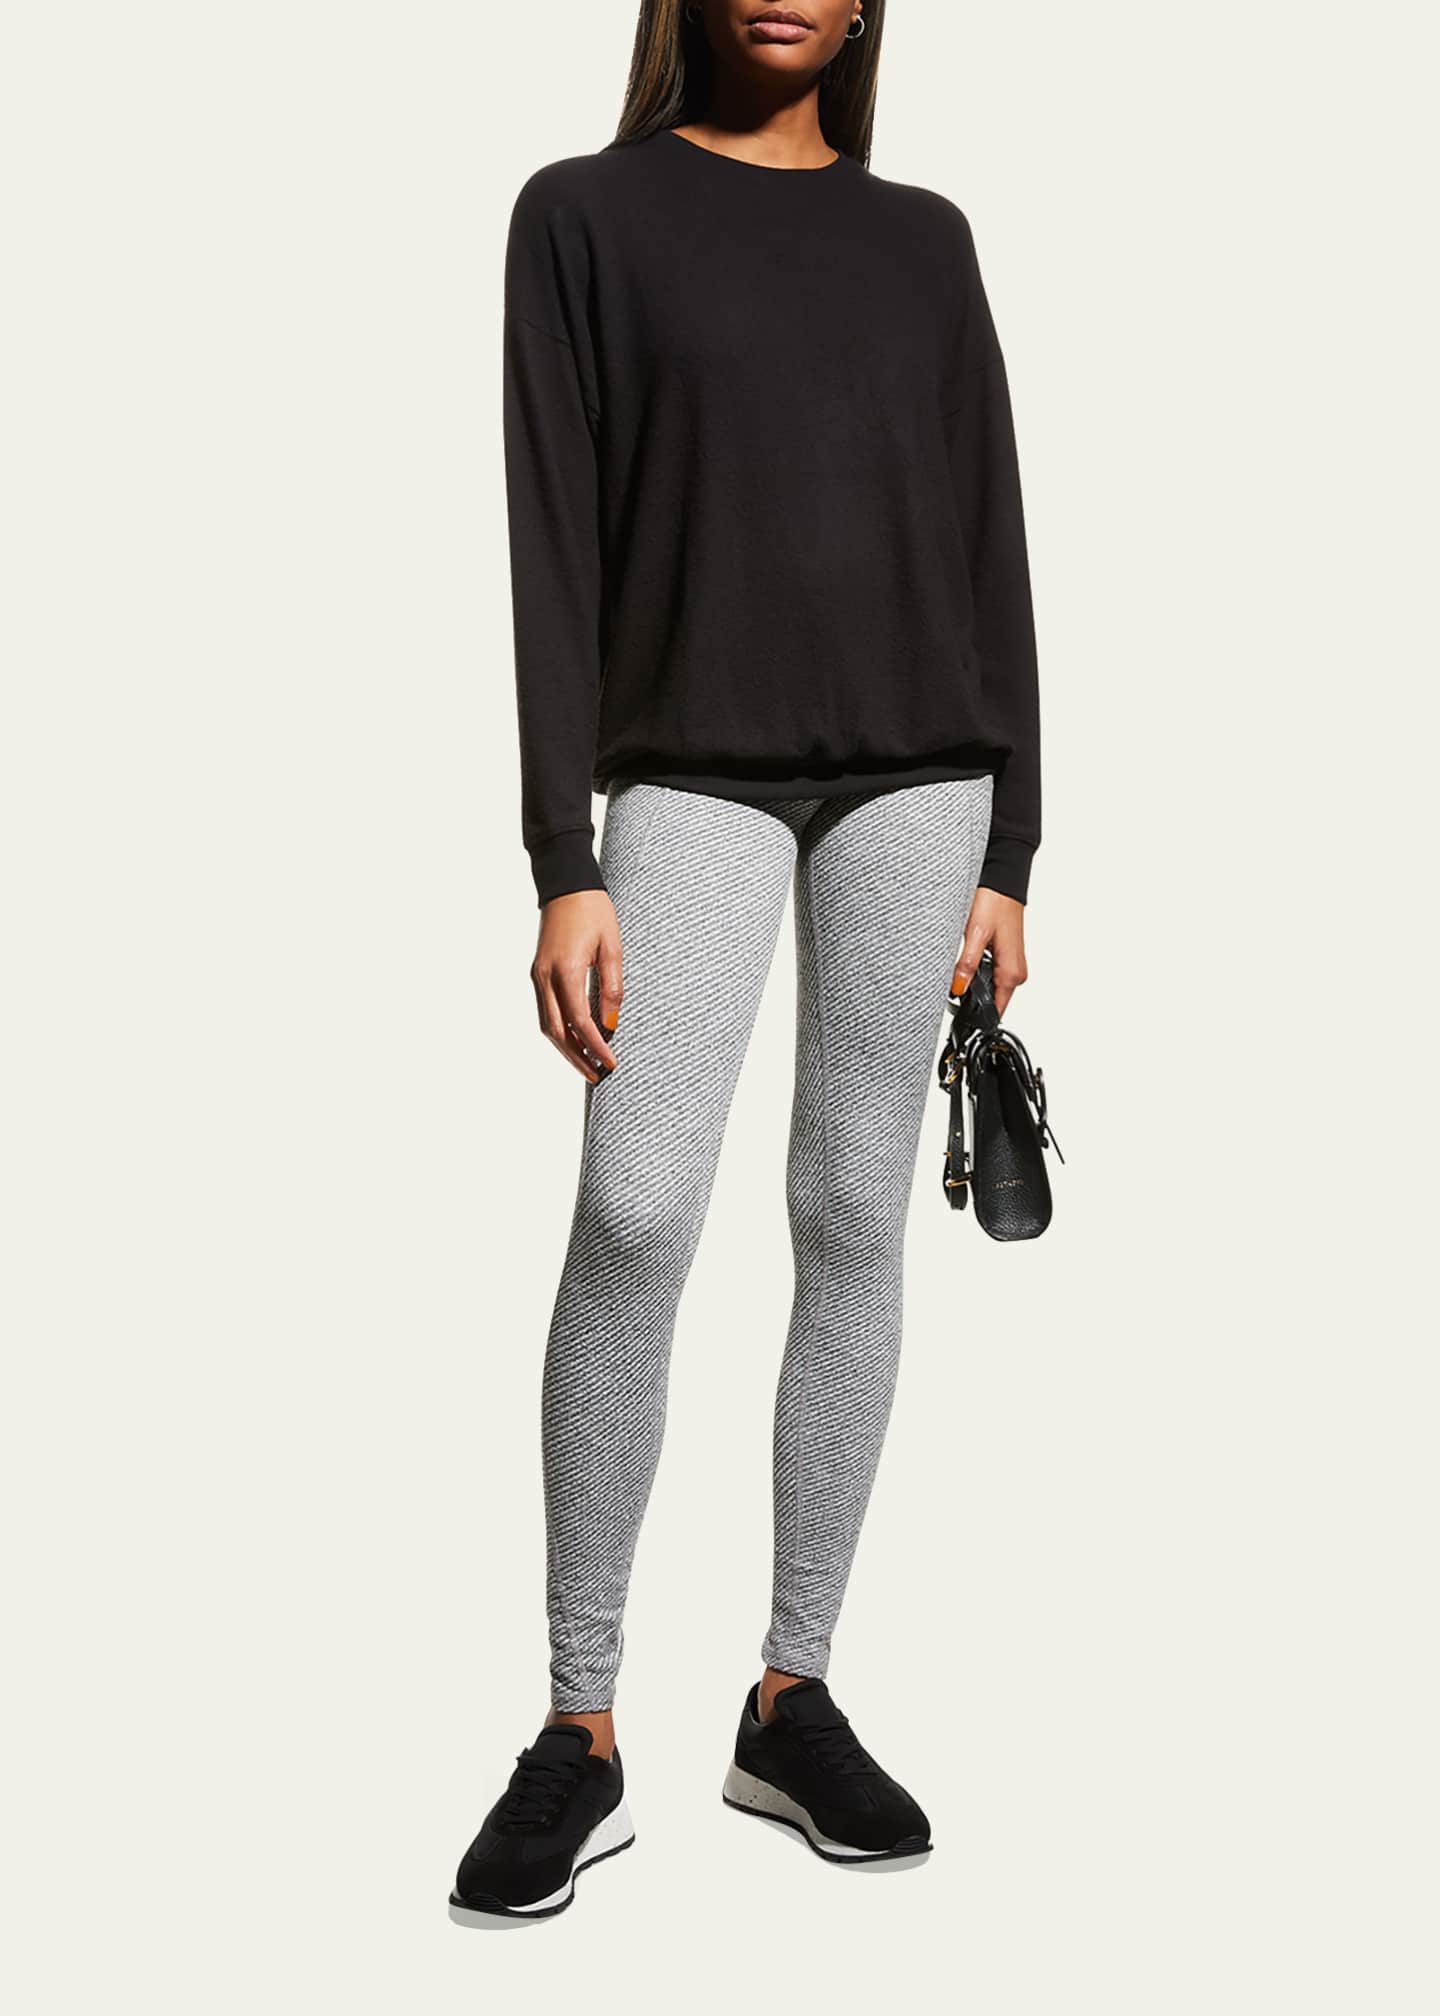 Alo Yoga Soho Crewneck Pullover Sweatshirt - Bergdorf Goodman